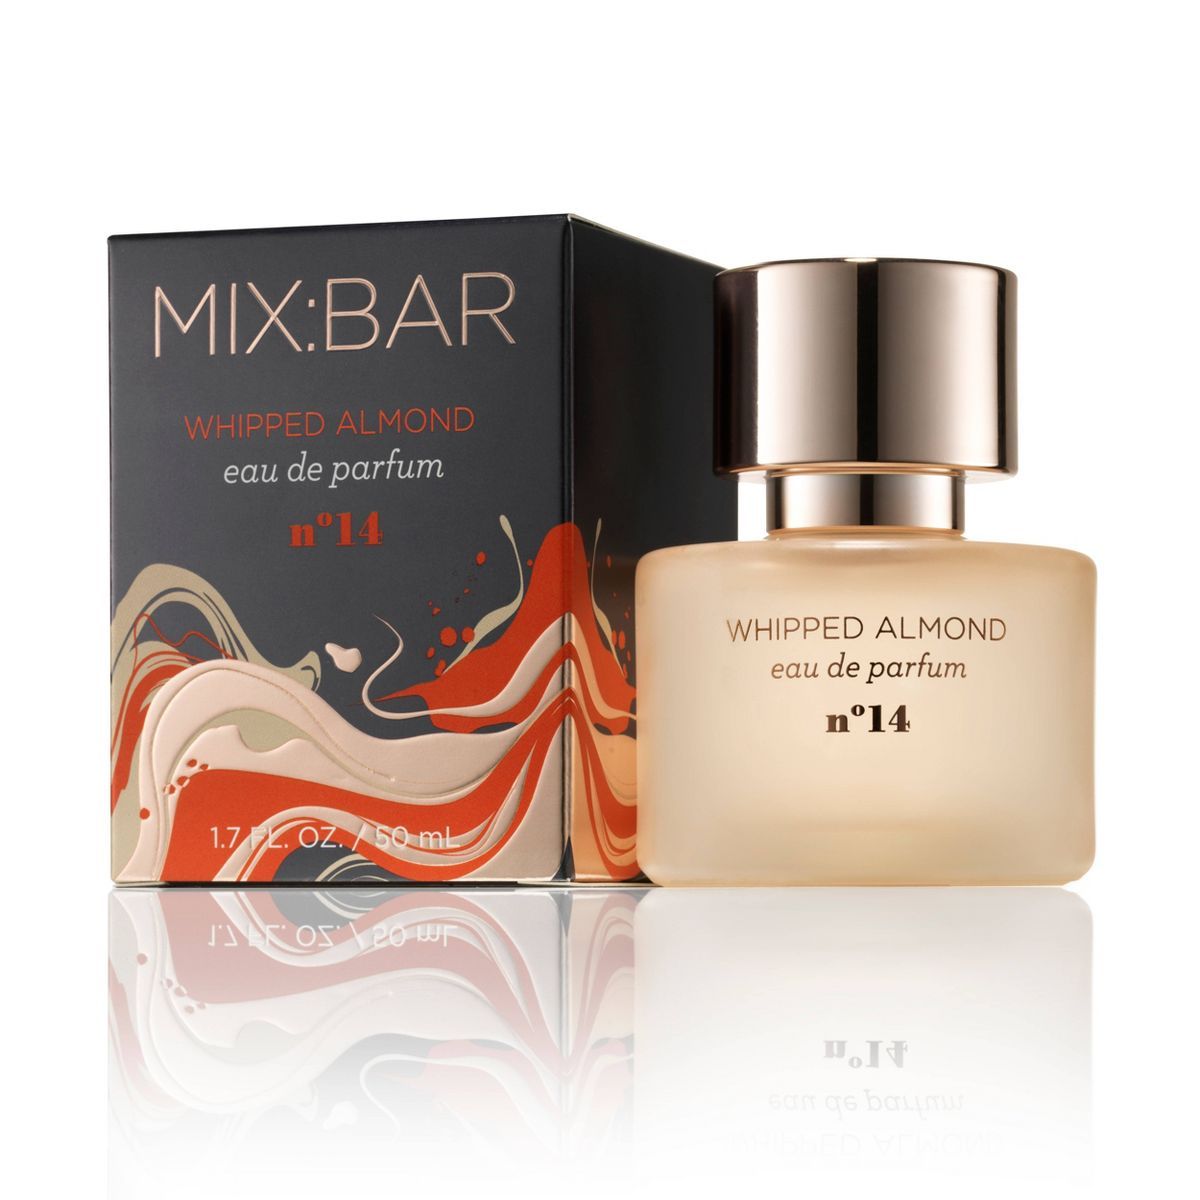 MIX:BAR Whipped Almond Eau de Parfum Spray - Clean & Vegan  Fragrance for Women - 1.7 fl oz | Target